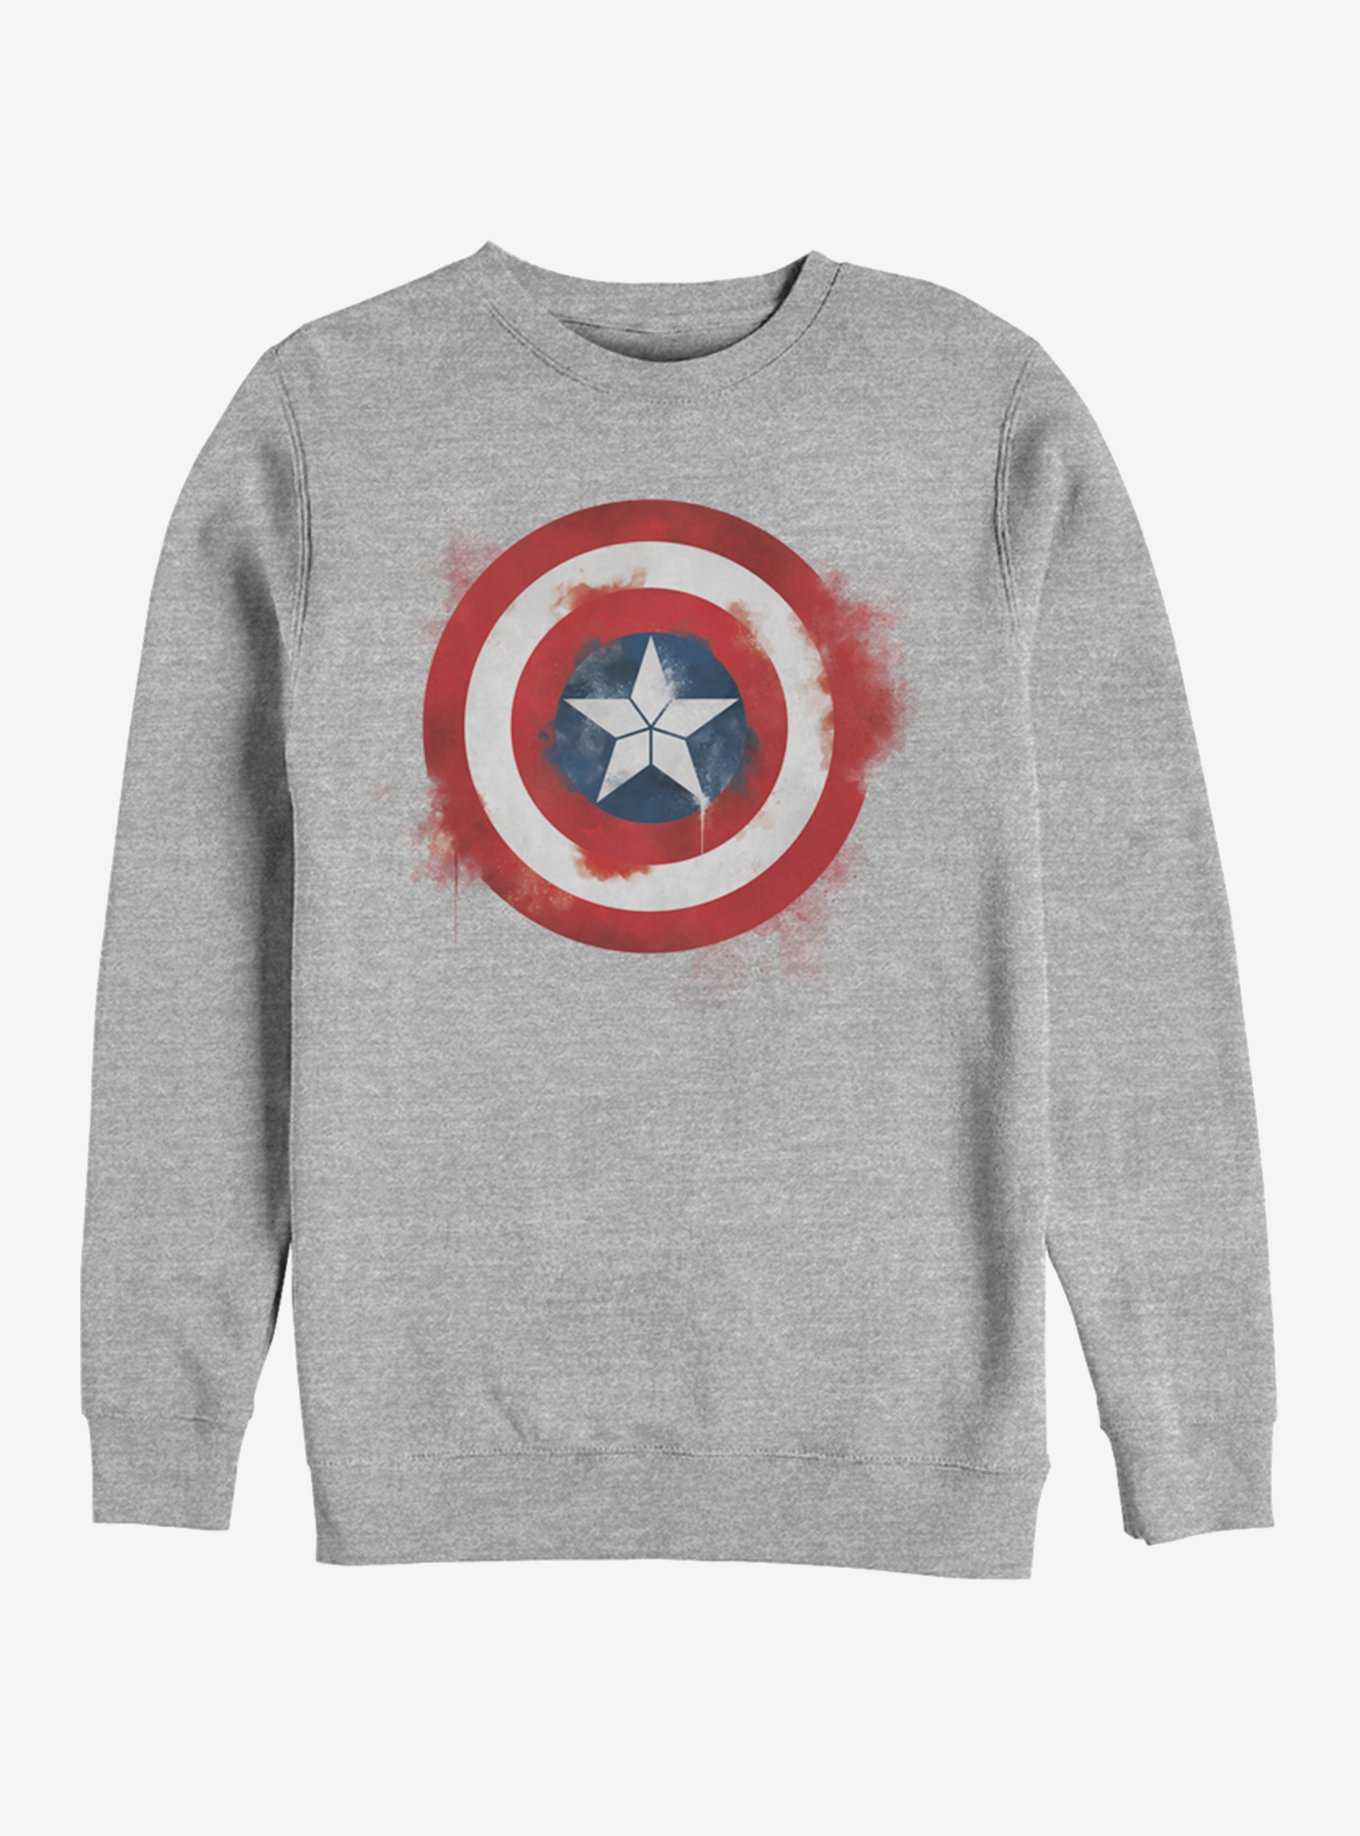 Marvel Avengers: Endgame Captain America Spray Logo Heathered Sweatshirt, , hi-res